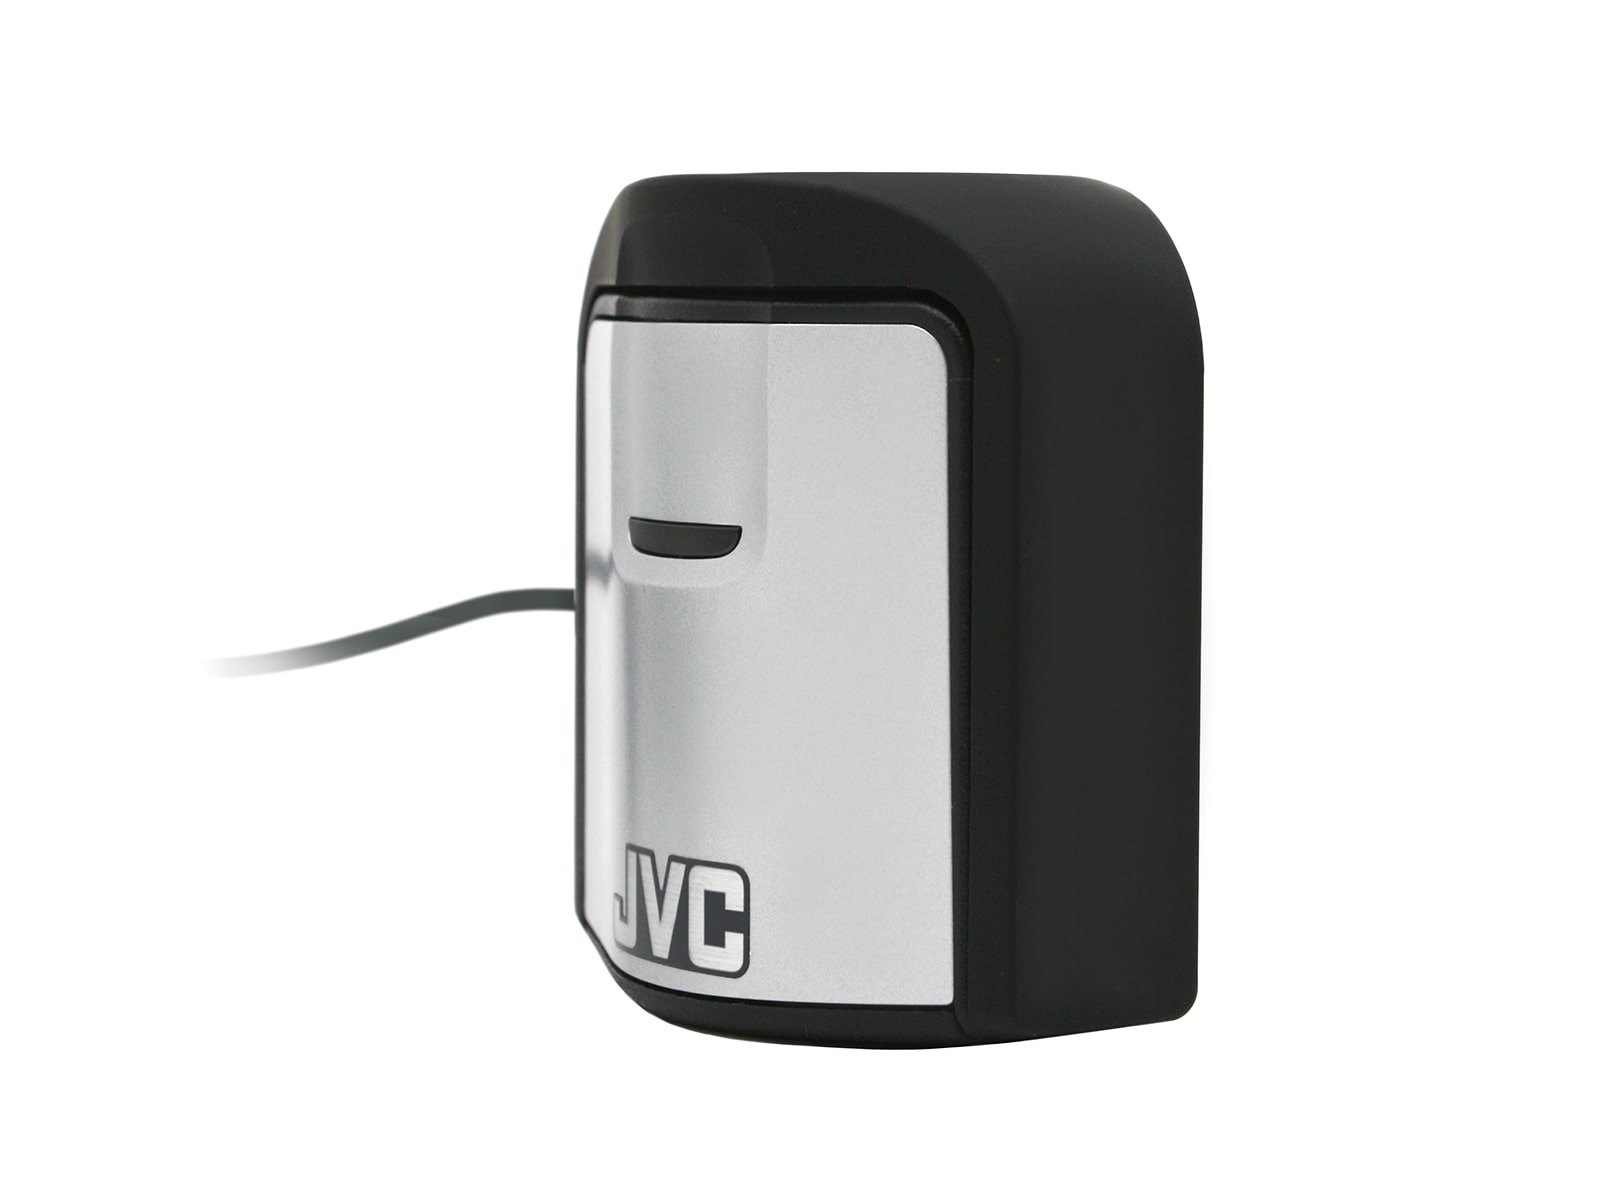 JVC Totoku Medivisor NX Calibration Sensor Kit with QA software (CAL-016) Monitors.com 